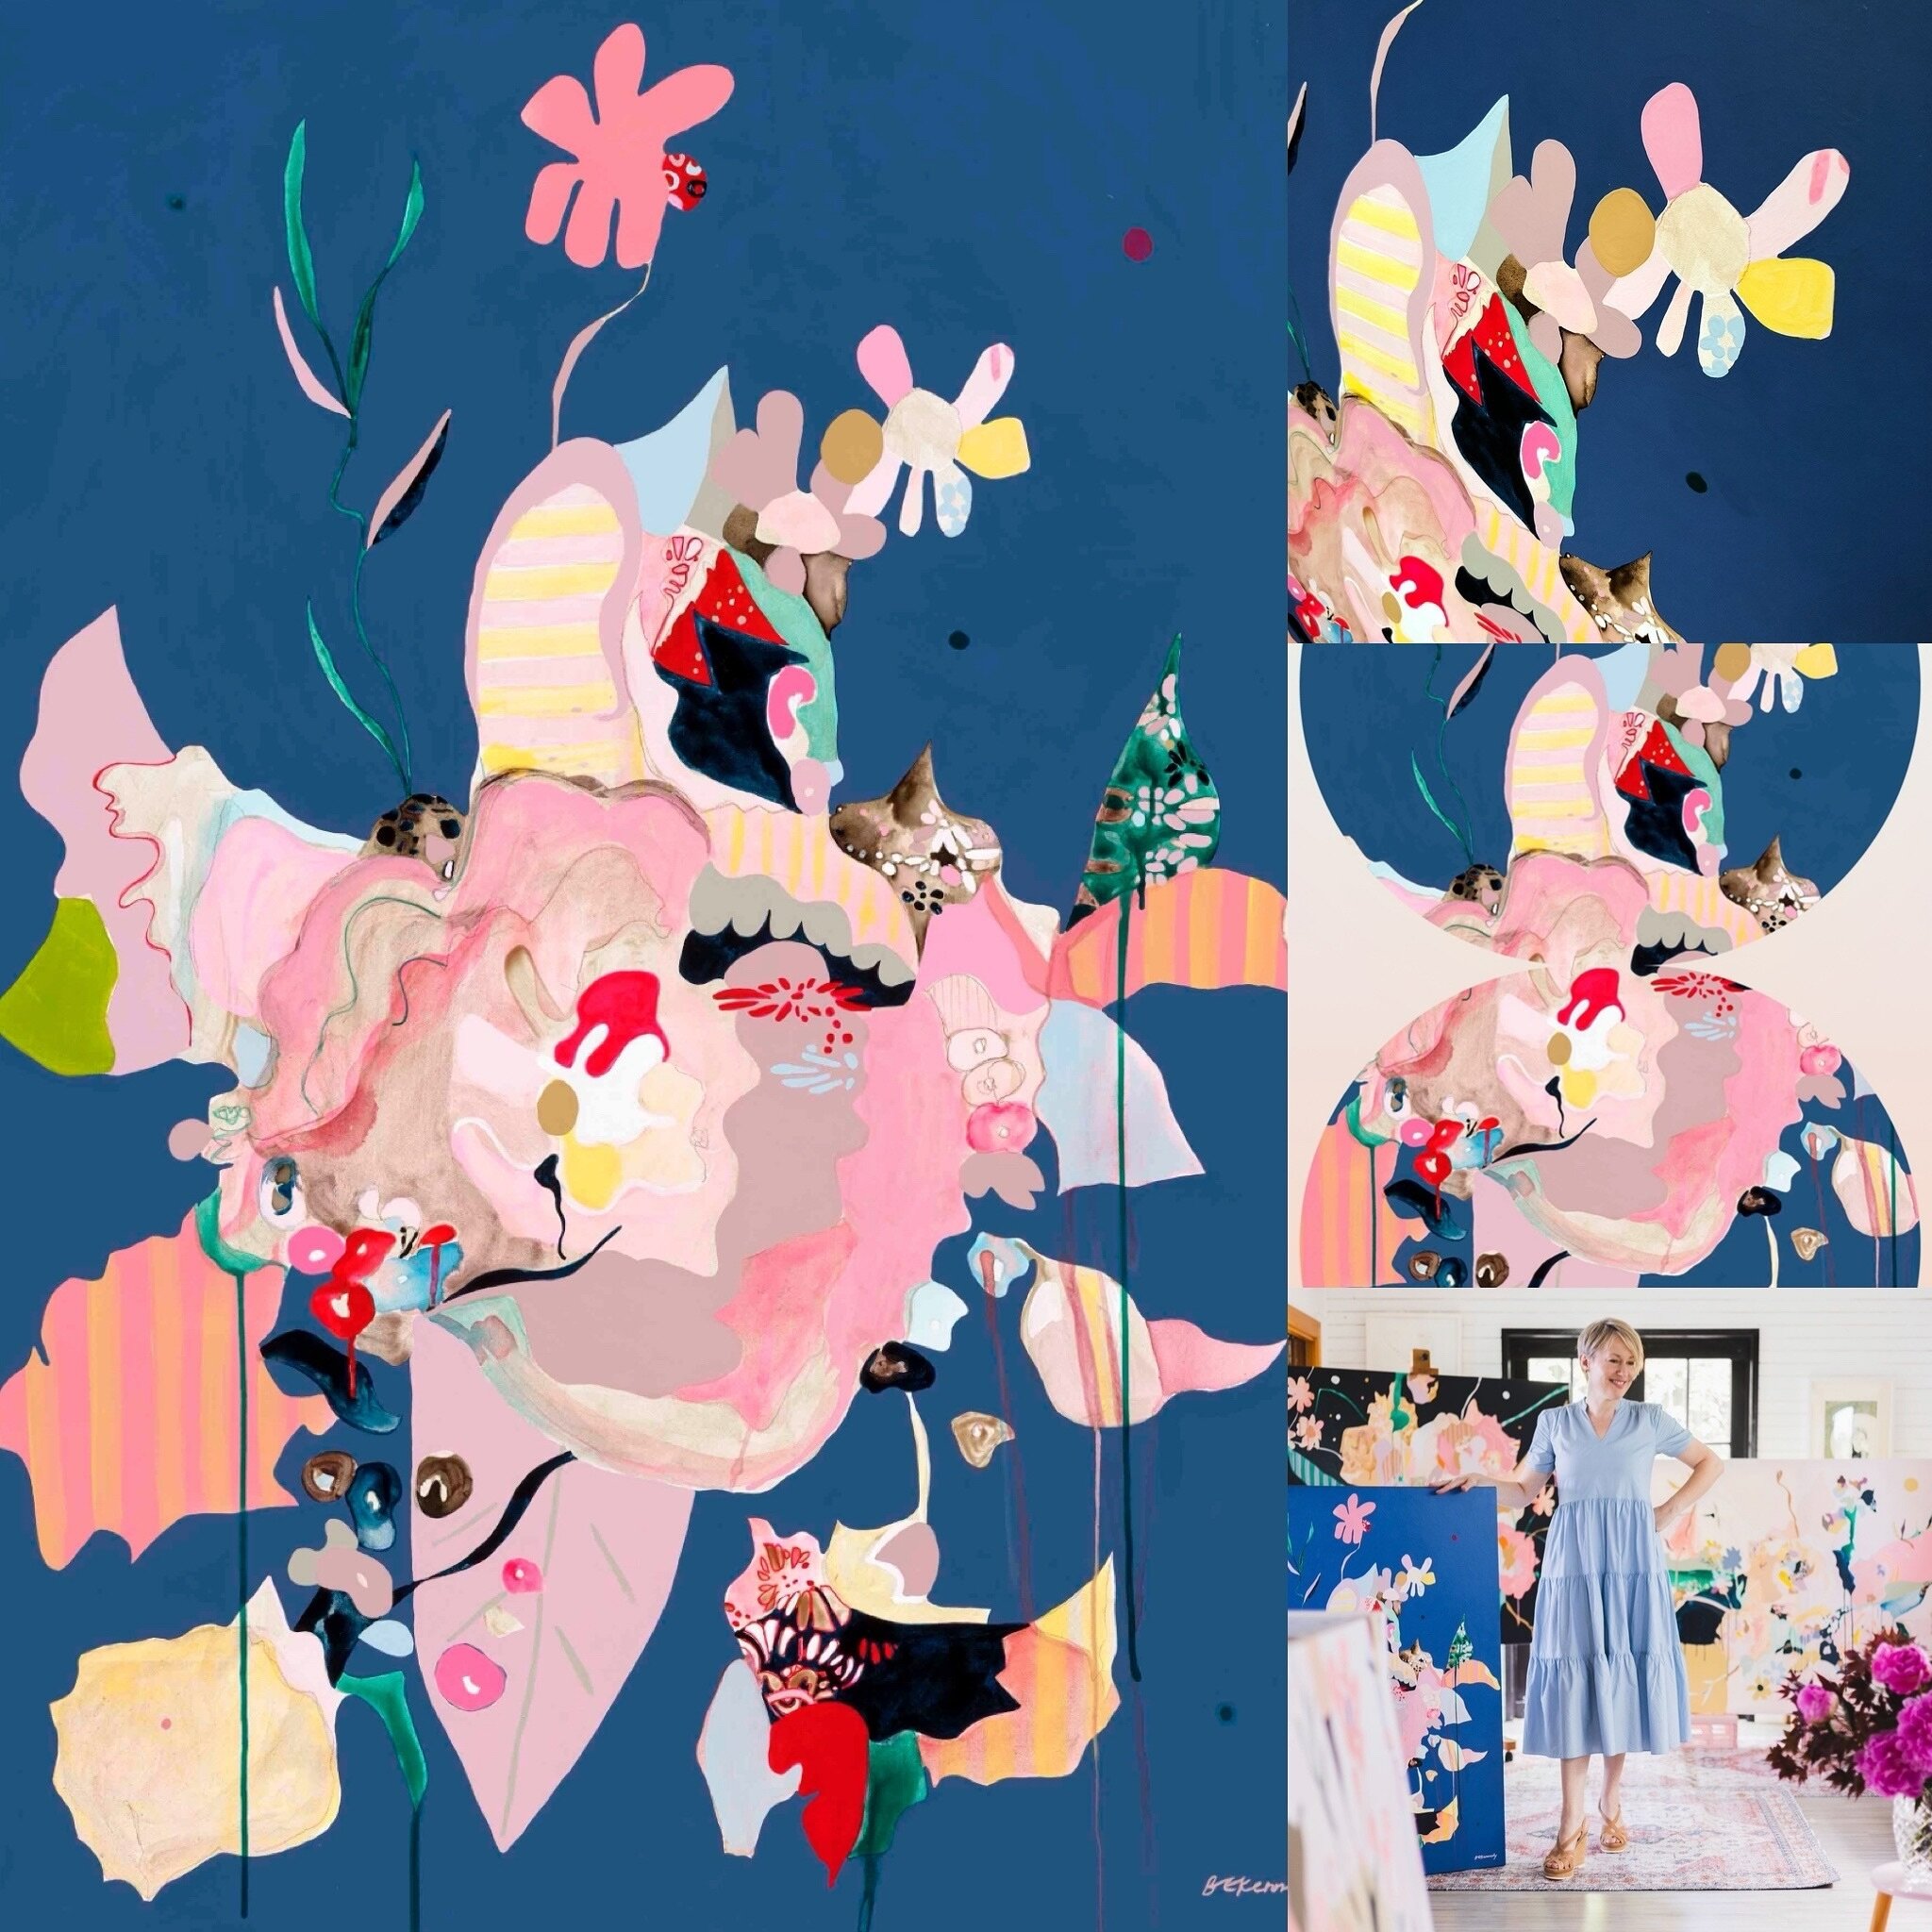 &lsquo;Peony Rose&rsquo; 🩷 122 x 91 cm 
Mixed media on canvas | oak frame 
@antheapolsonart 

#bethkennedyart #botanicalart #australianart #australianartists #colour #colourpop #originalart #originalartists #InteriorDesign 
#painting #art #fineart #